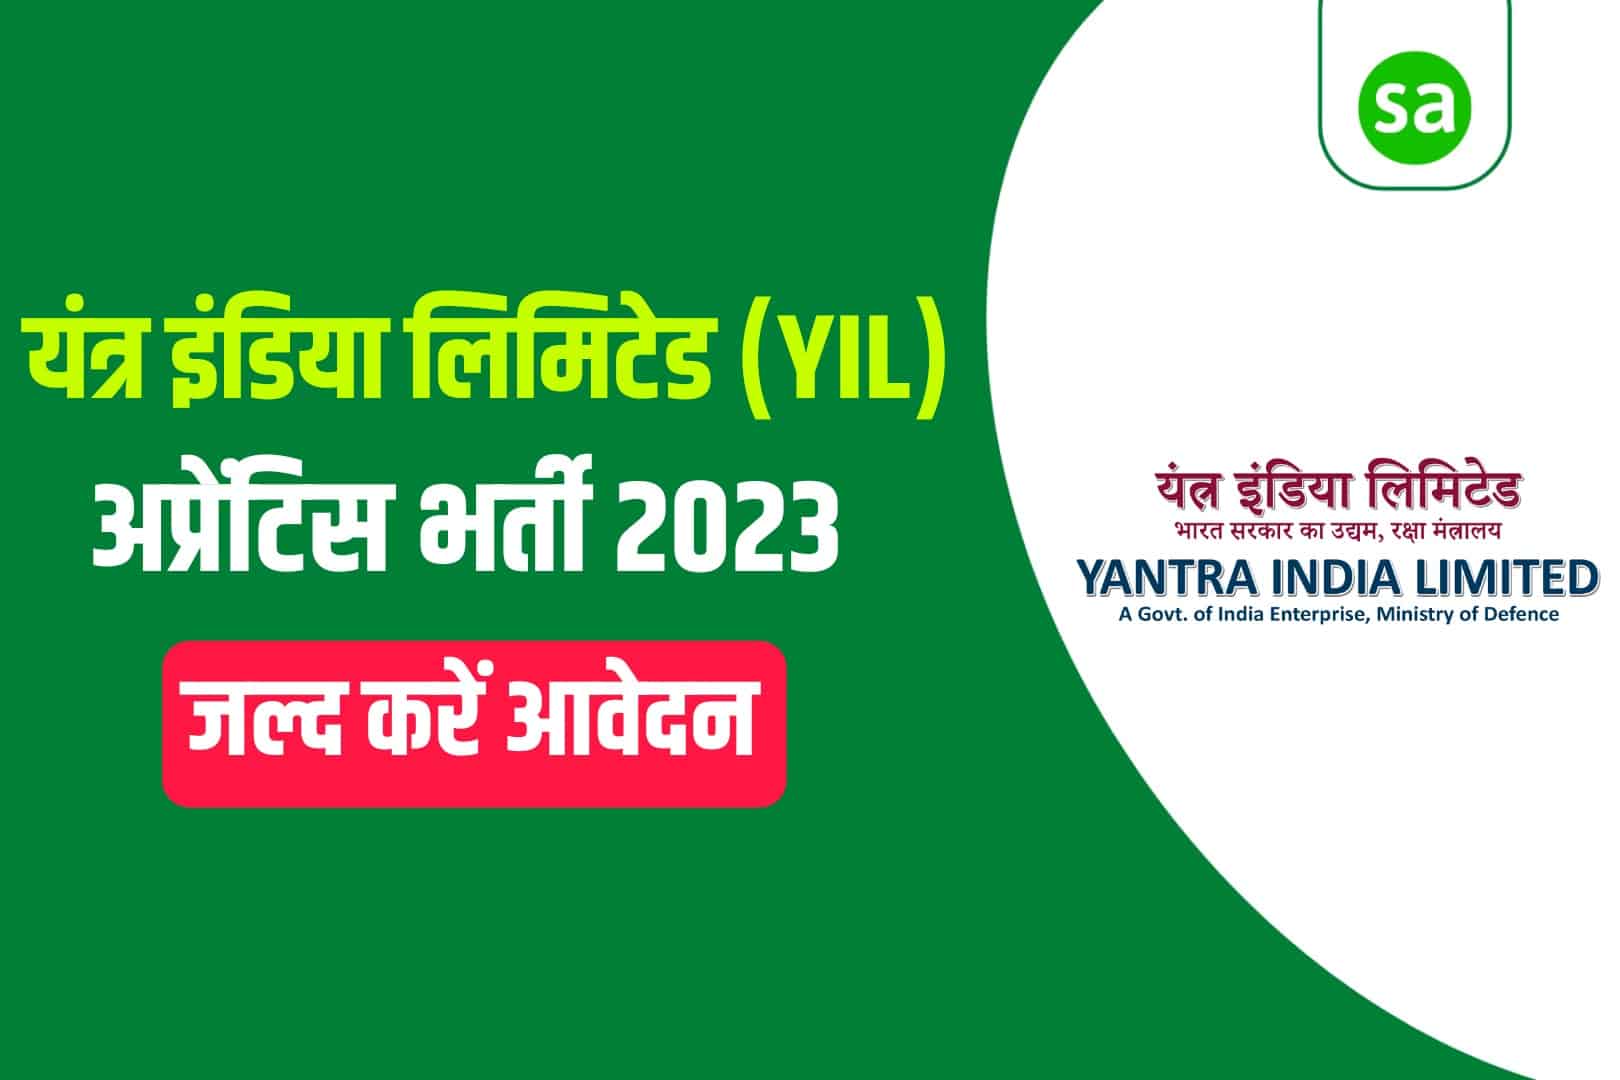 YIL Ordnance Factory Apprentice Recruitment 2023 Online Form | यंत्र इंडिया लिमिटेड अप्रेंटिस भर्ती 2023